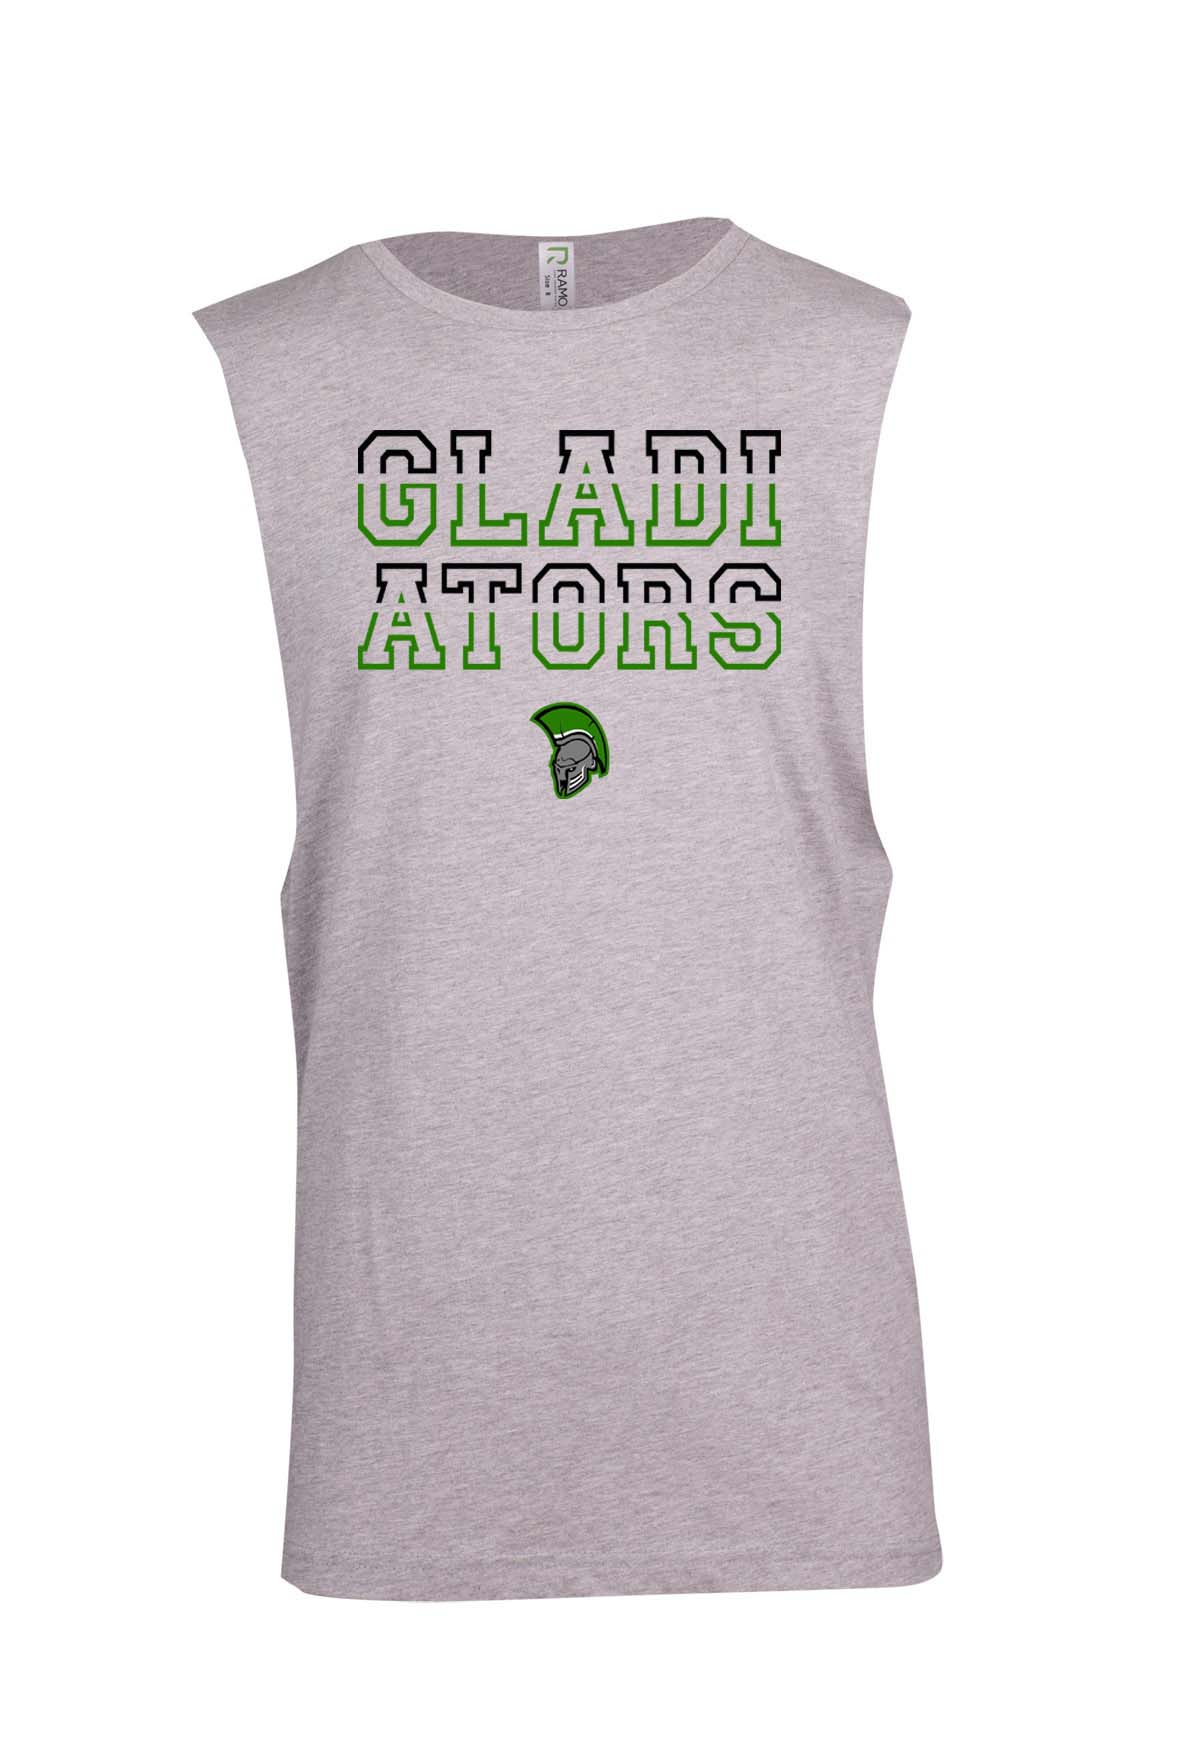 Gladiators Sliced logo Muscle T - Ladies